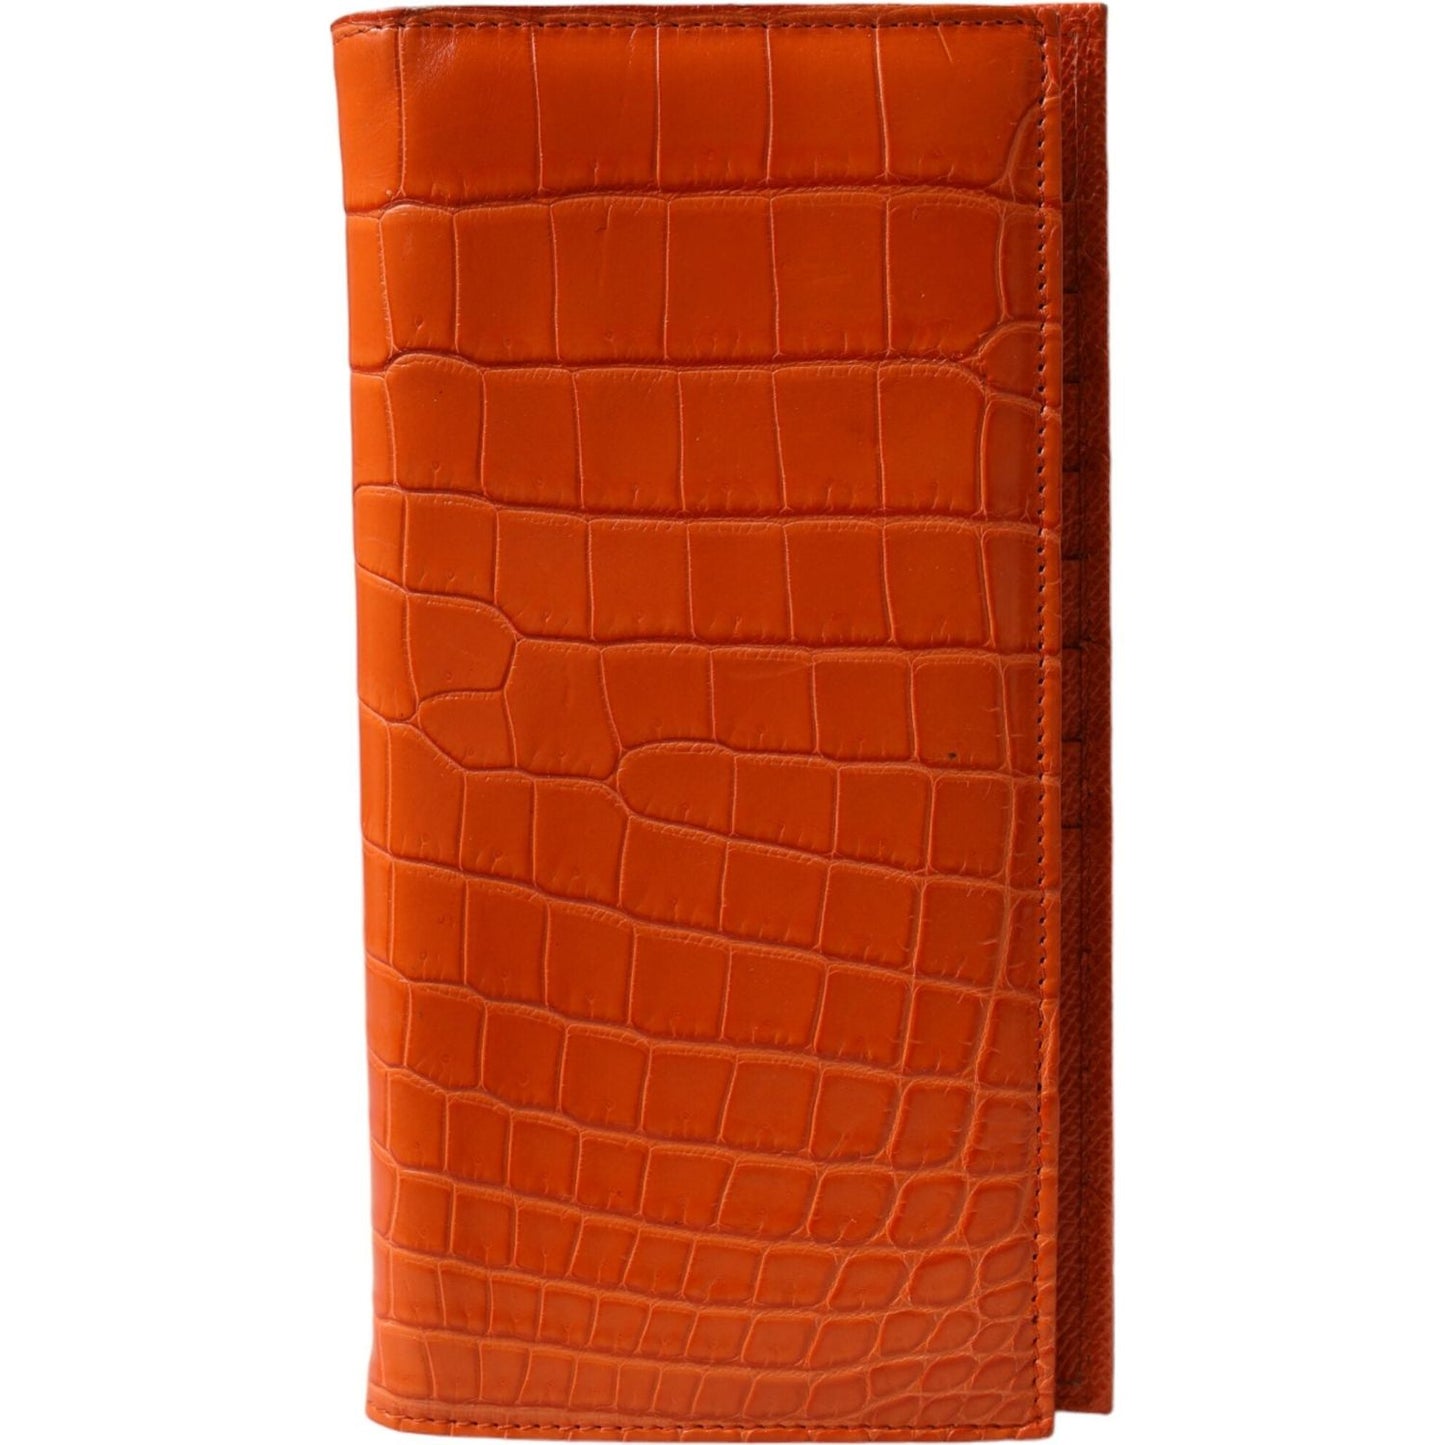 Dolce & Gabbana Chic Orange Crocodile Leather Wallet orange-crocodile-leather-long-bifold-card-holder-wallet